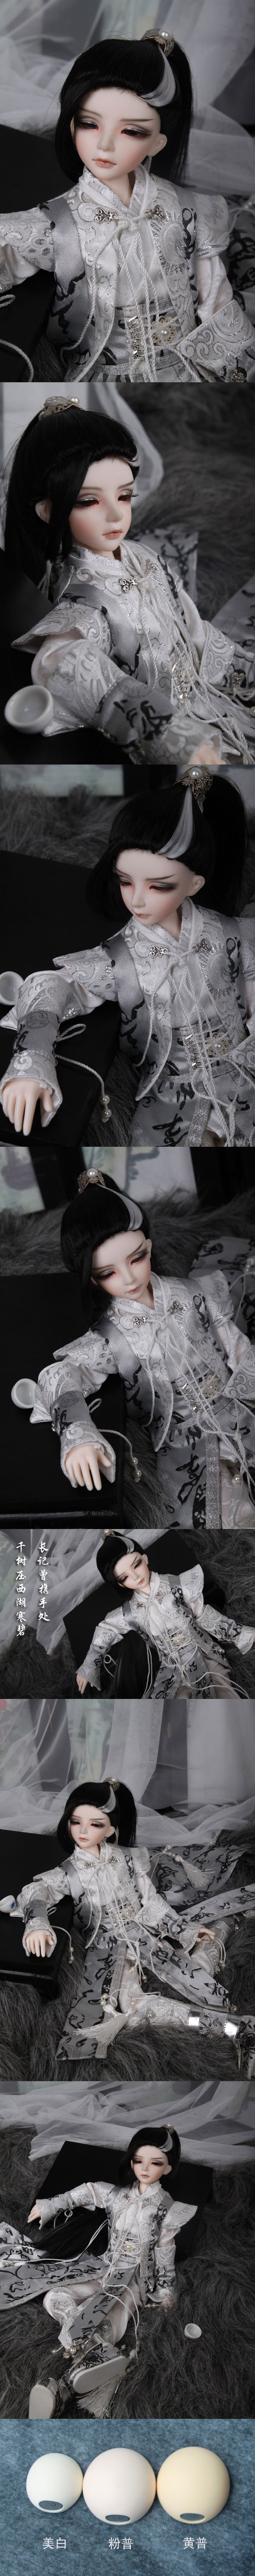 BJD Han Bi Boy 43.5cm Boll-jointed doll